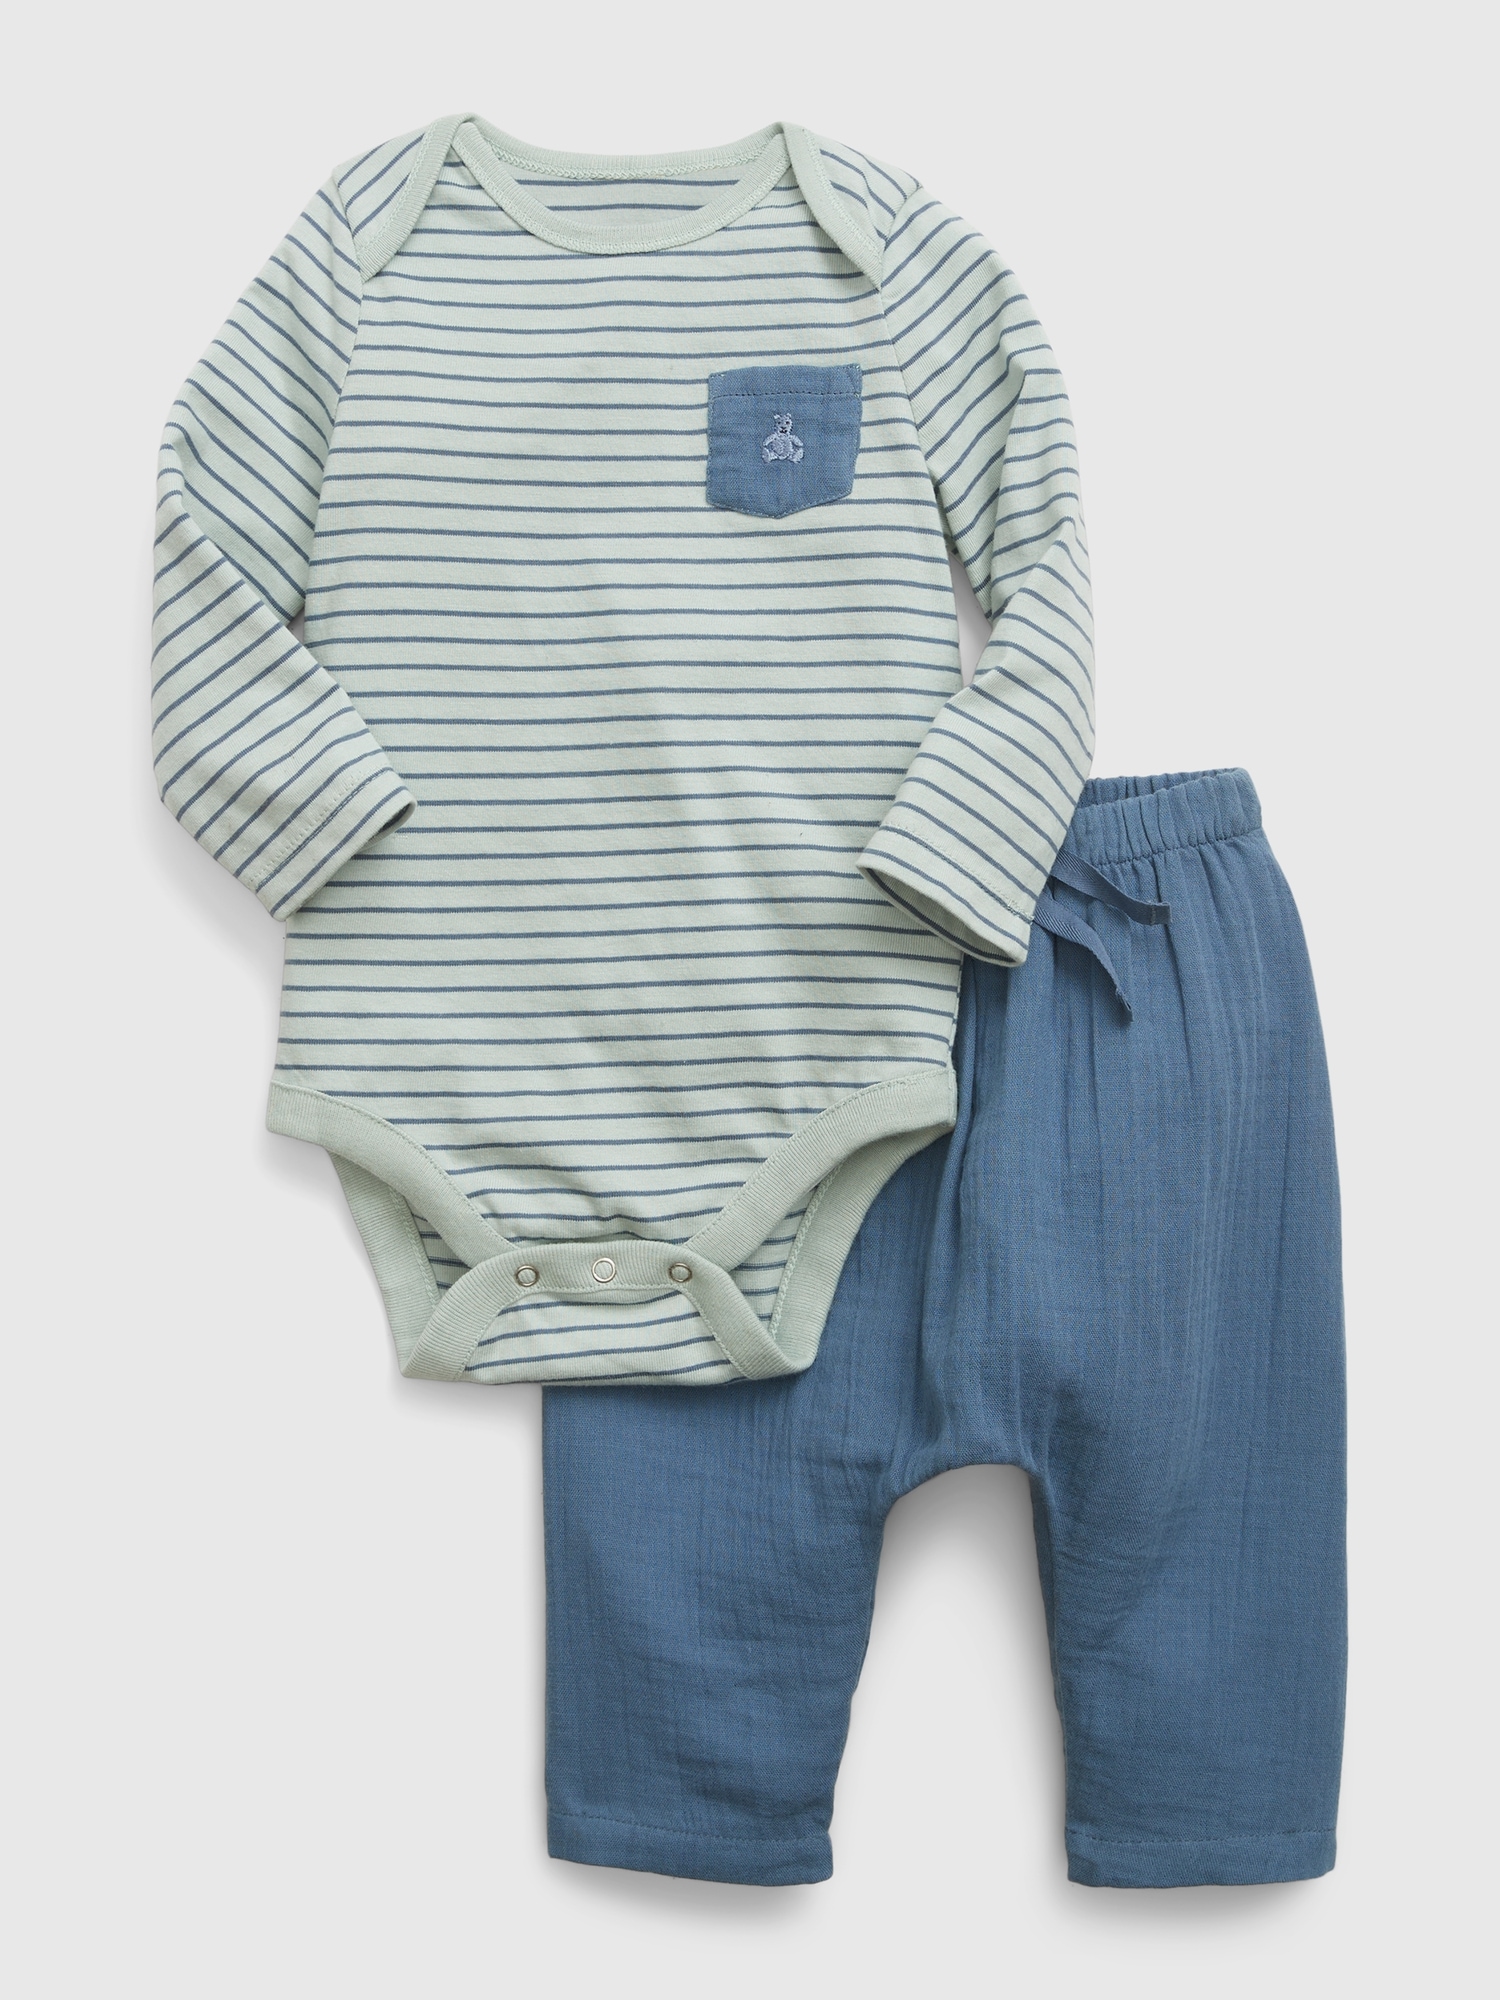 Baby Crinkle Gauze Bodysuit Outfit Set